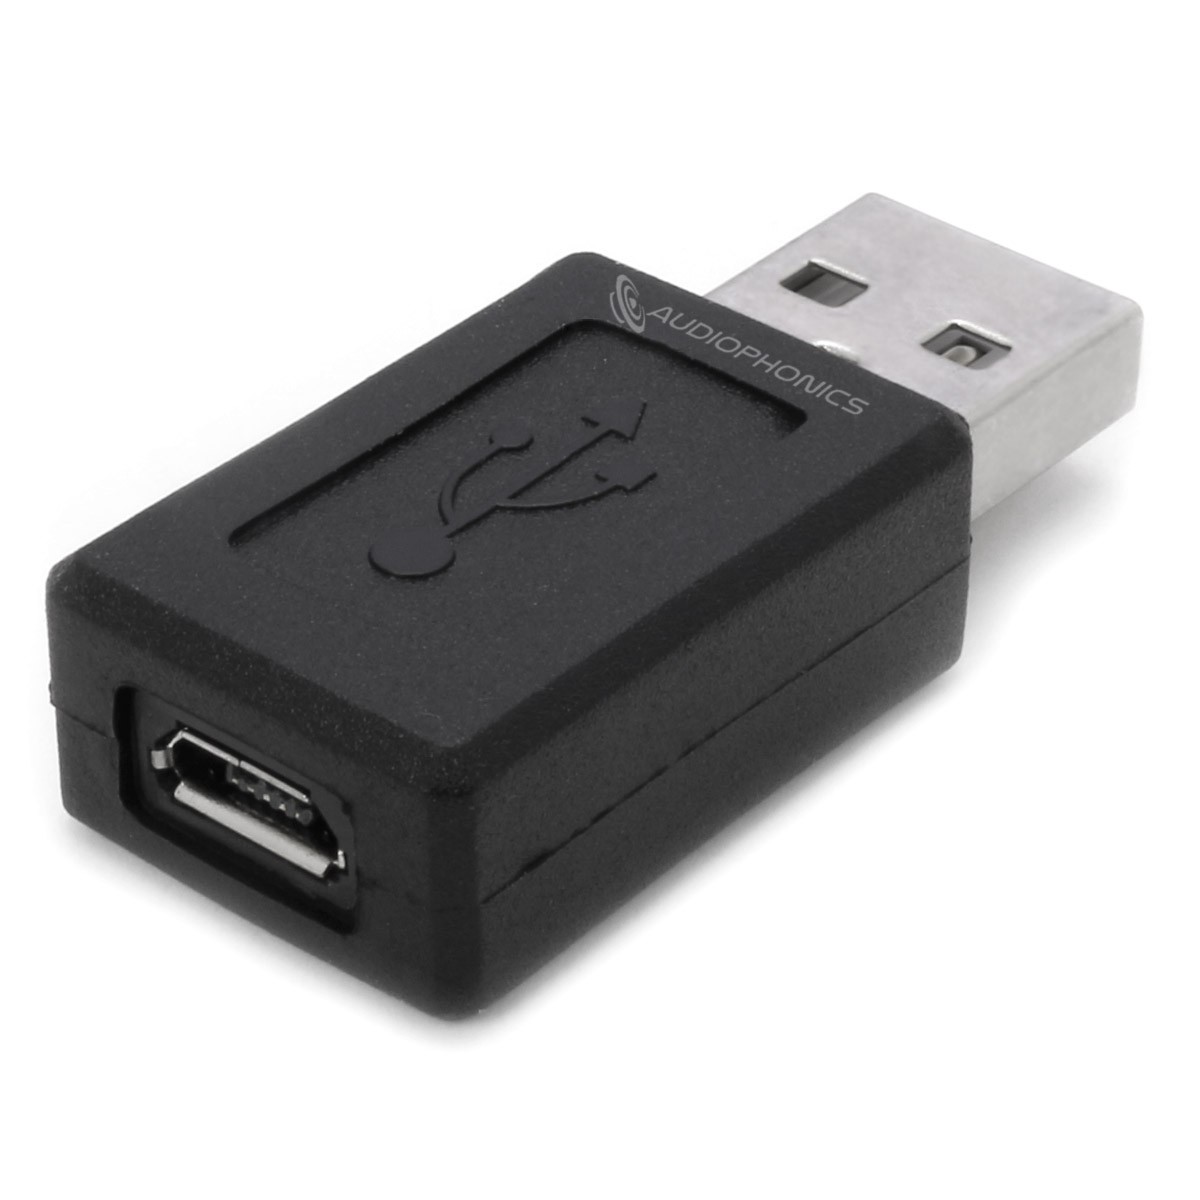 Microphone USB Femelle vers Xlr Mâle Câble Convertisseur Adaptateur